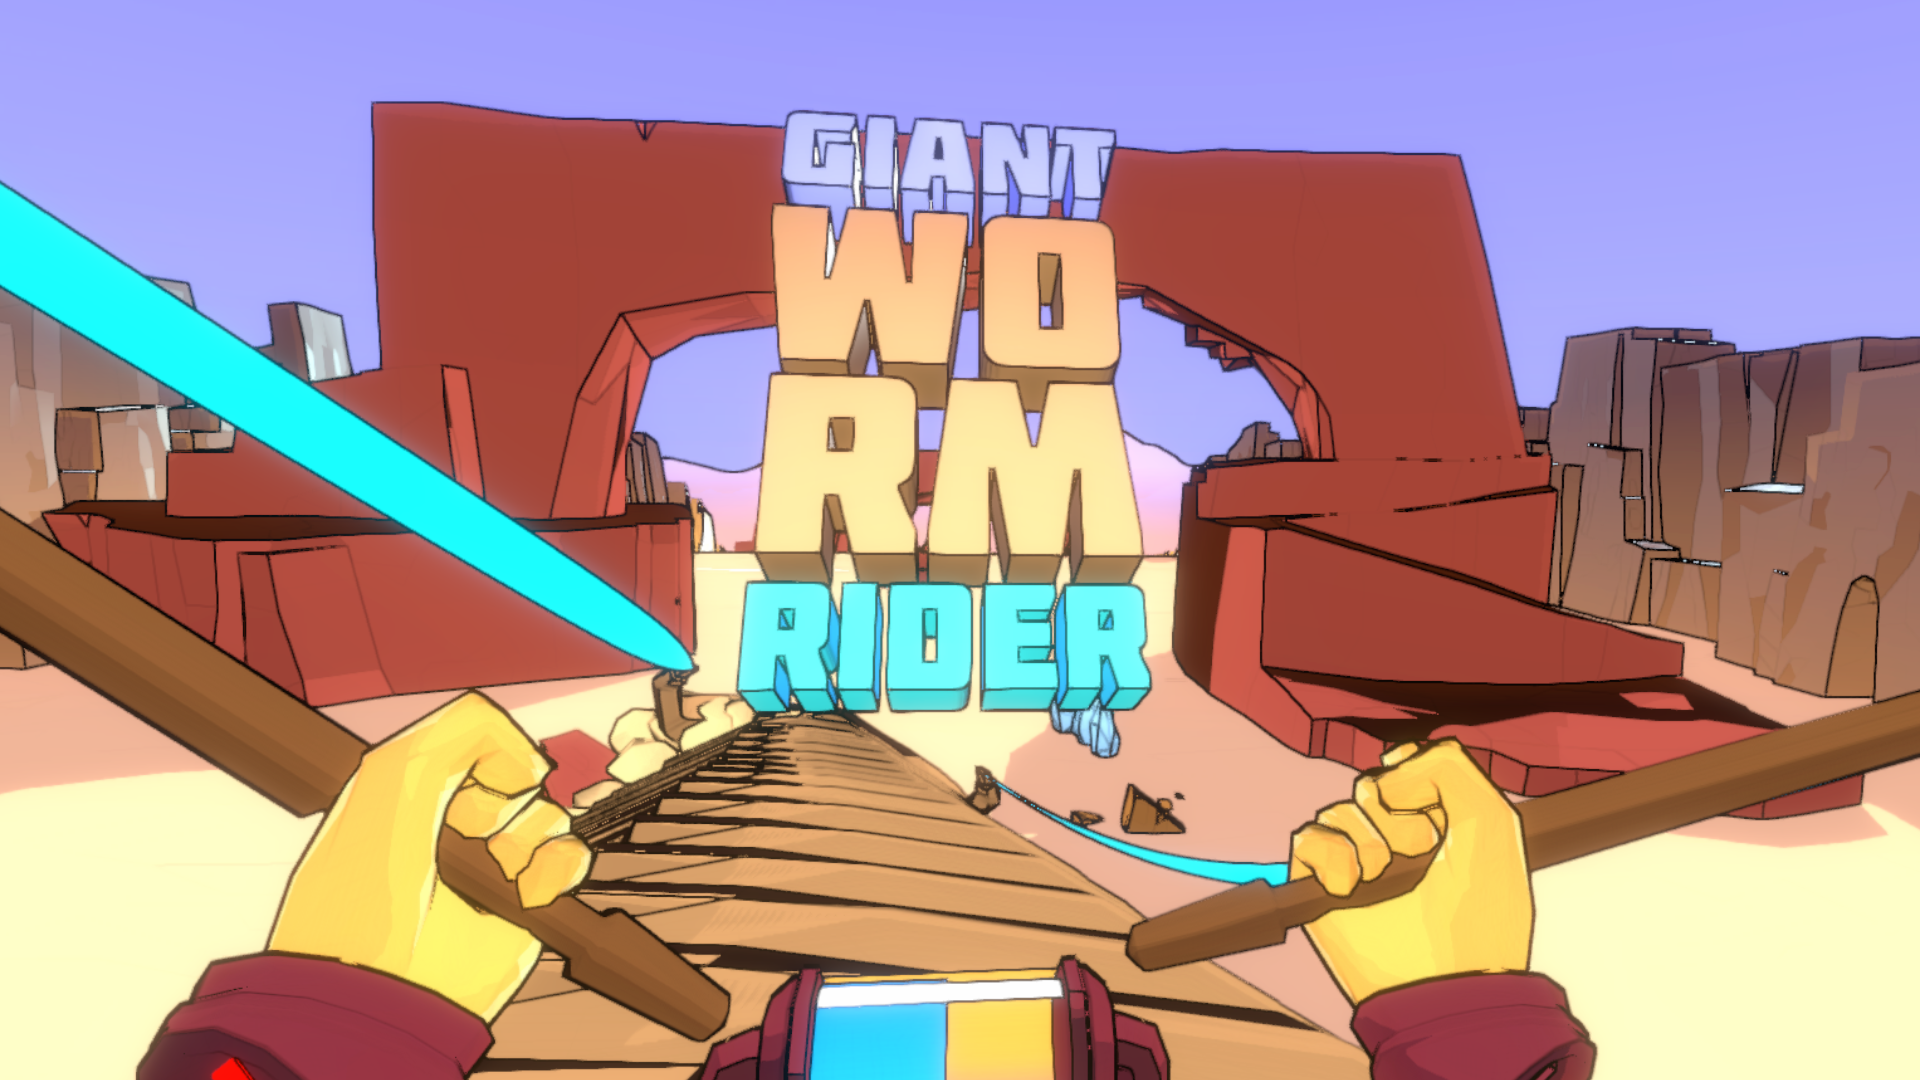 Giant Worm Rider